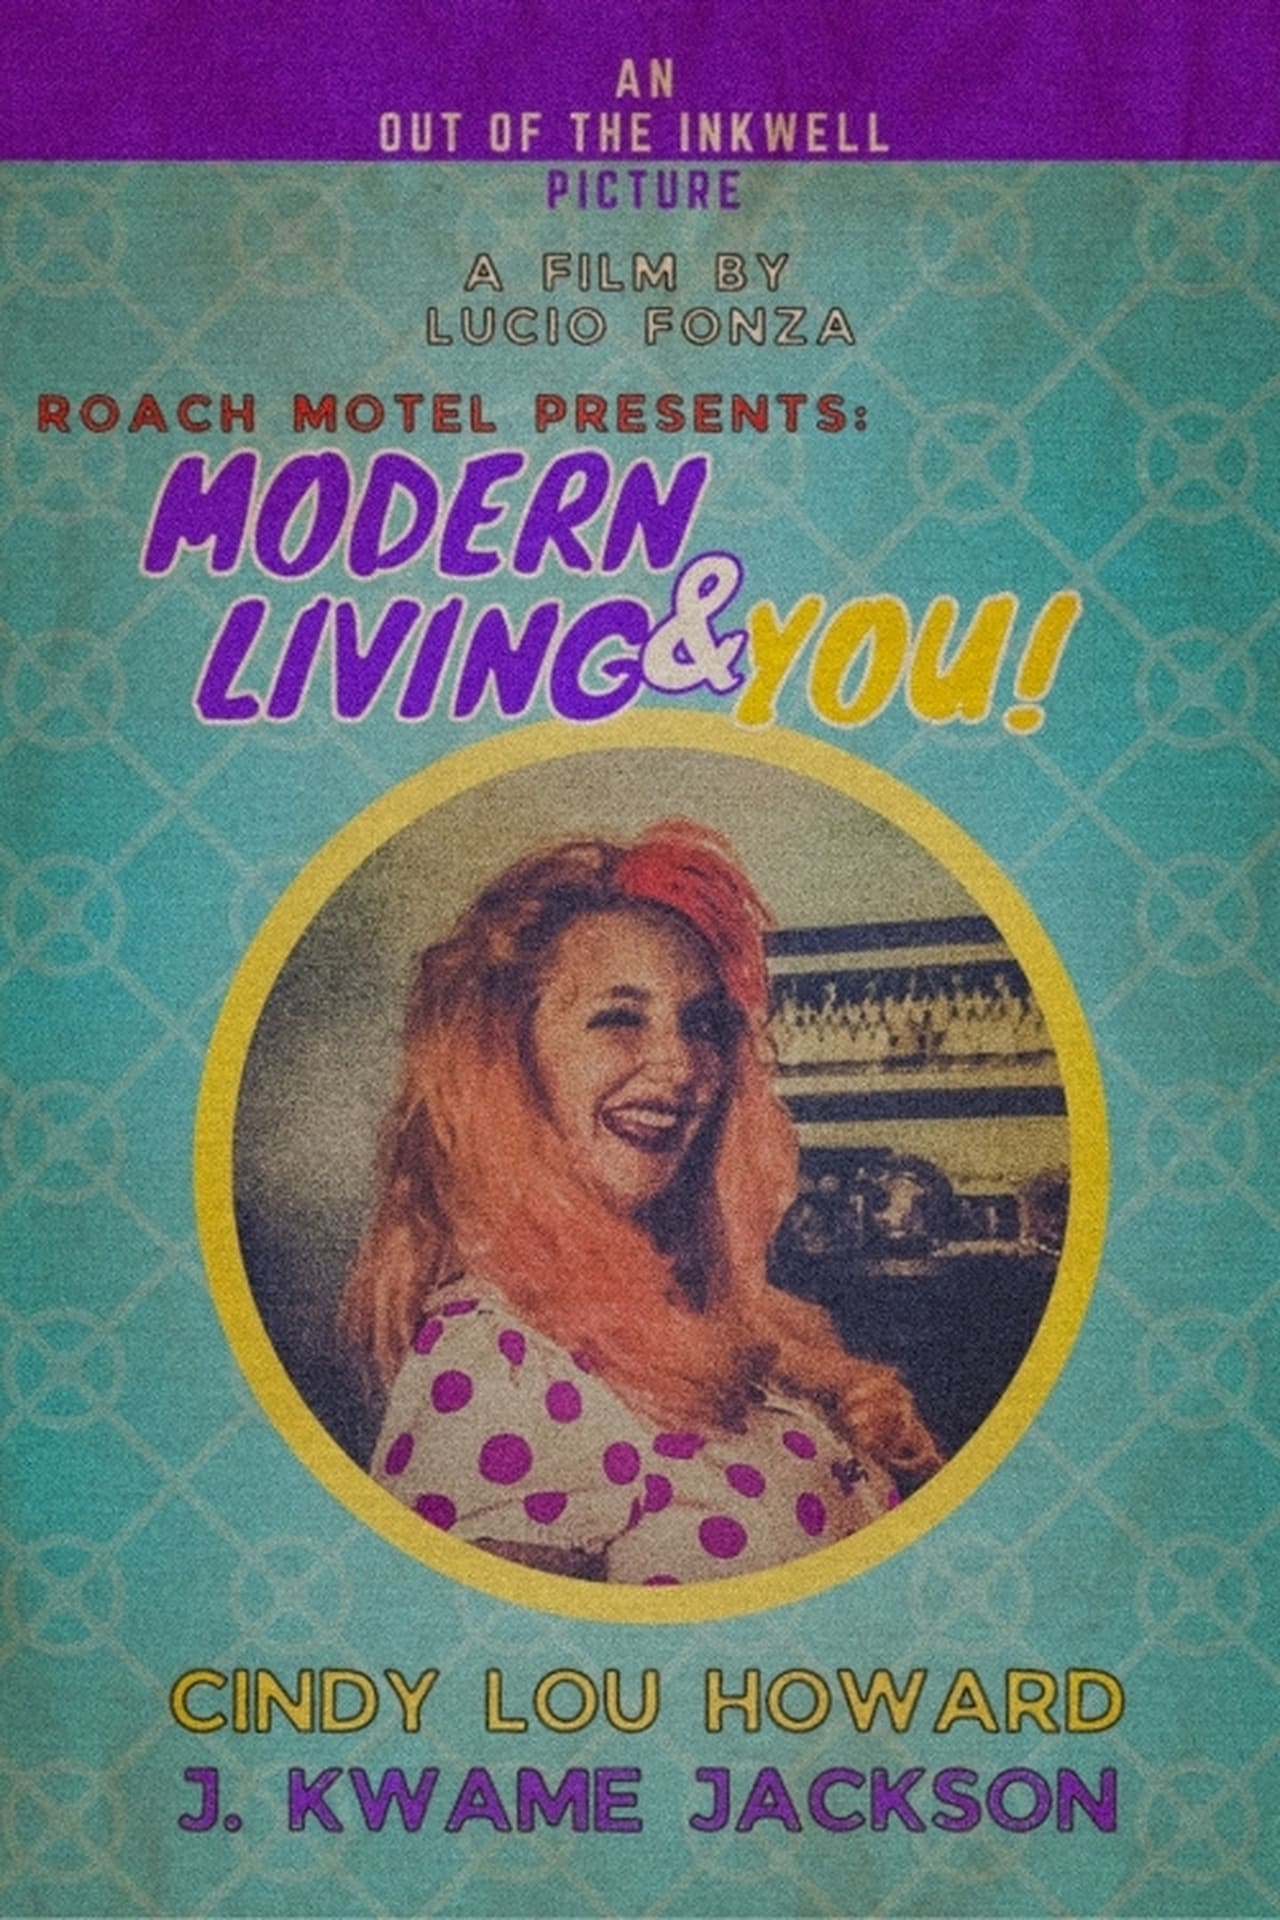 Modern Living & You!